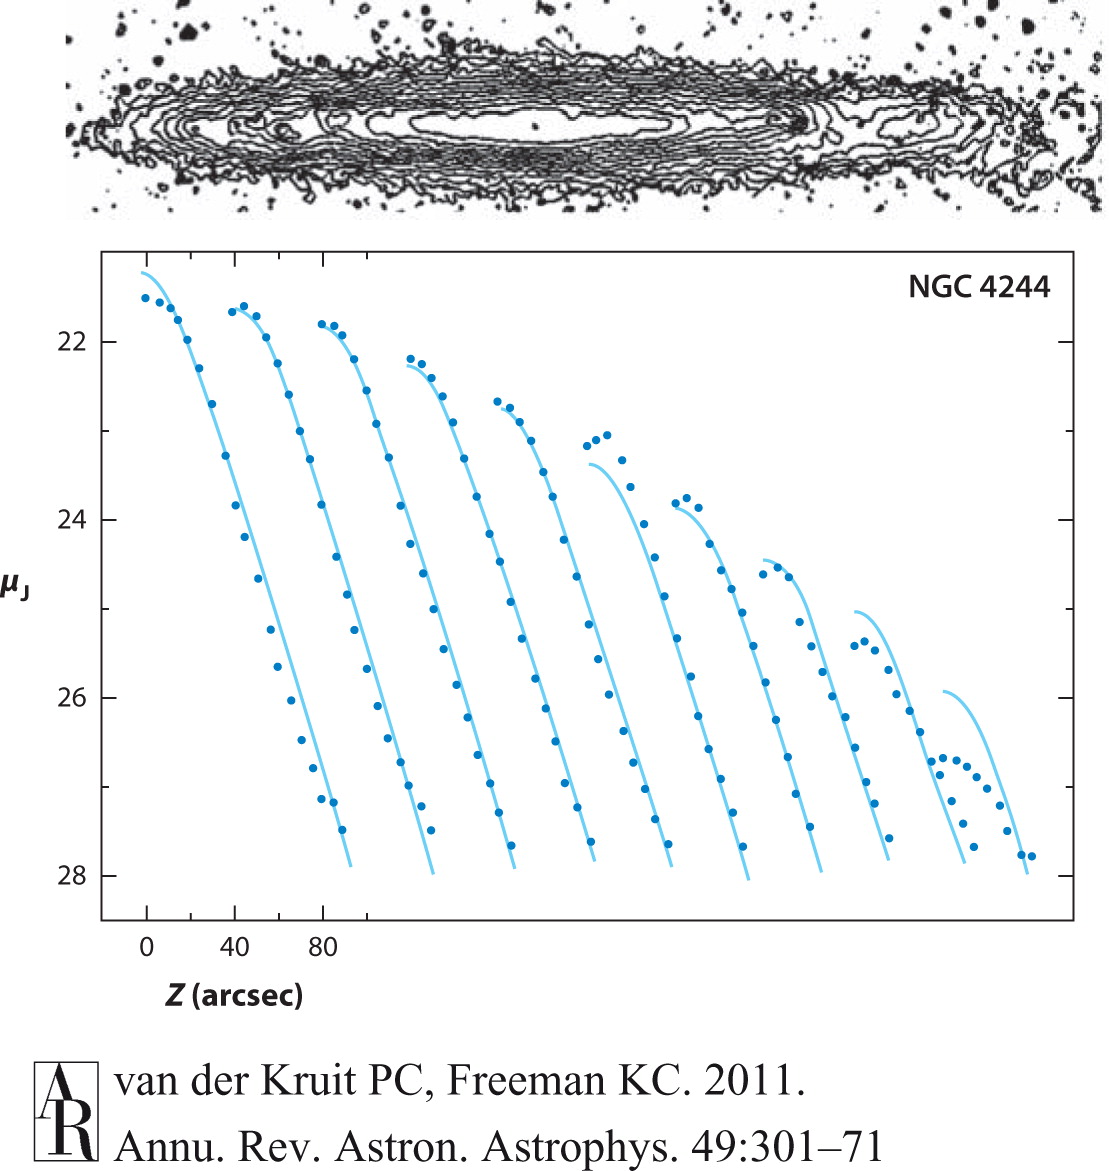 Figure 3 of van der Kruit & Freeman (2011): surface-brightness profile of NGC 4244